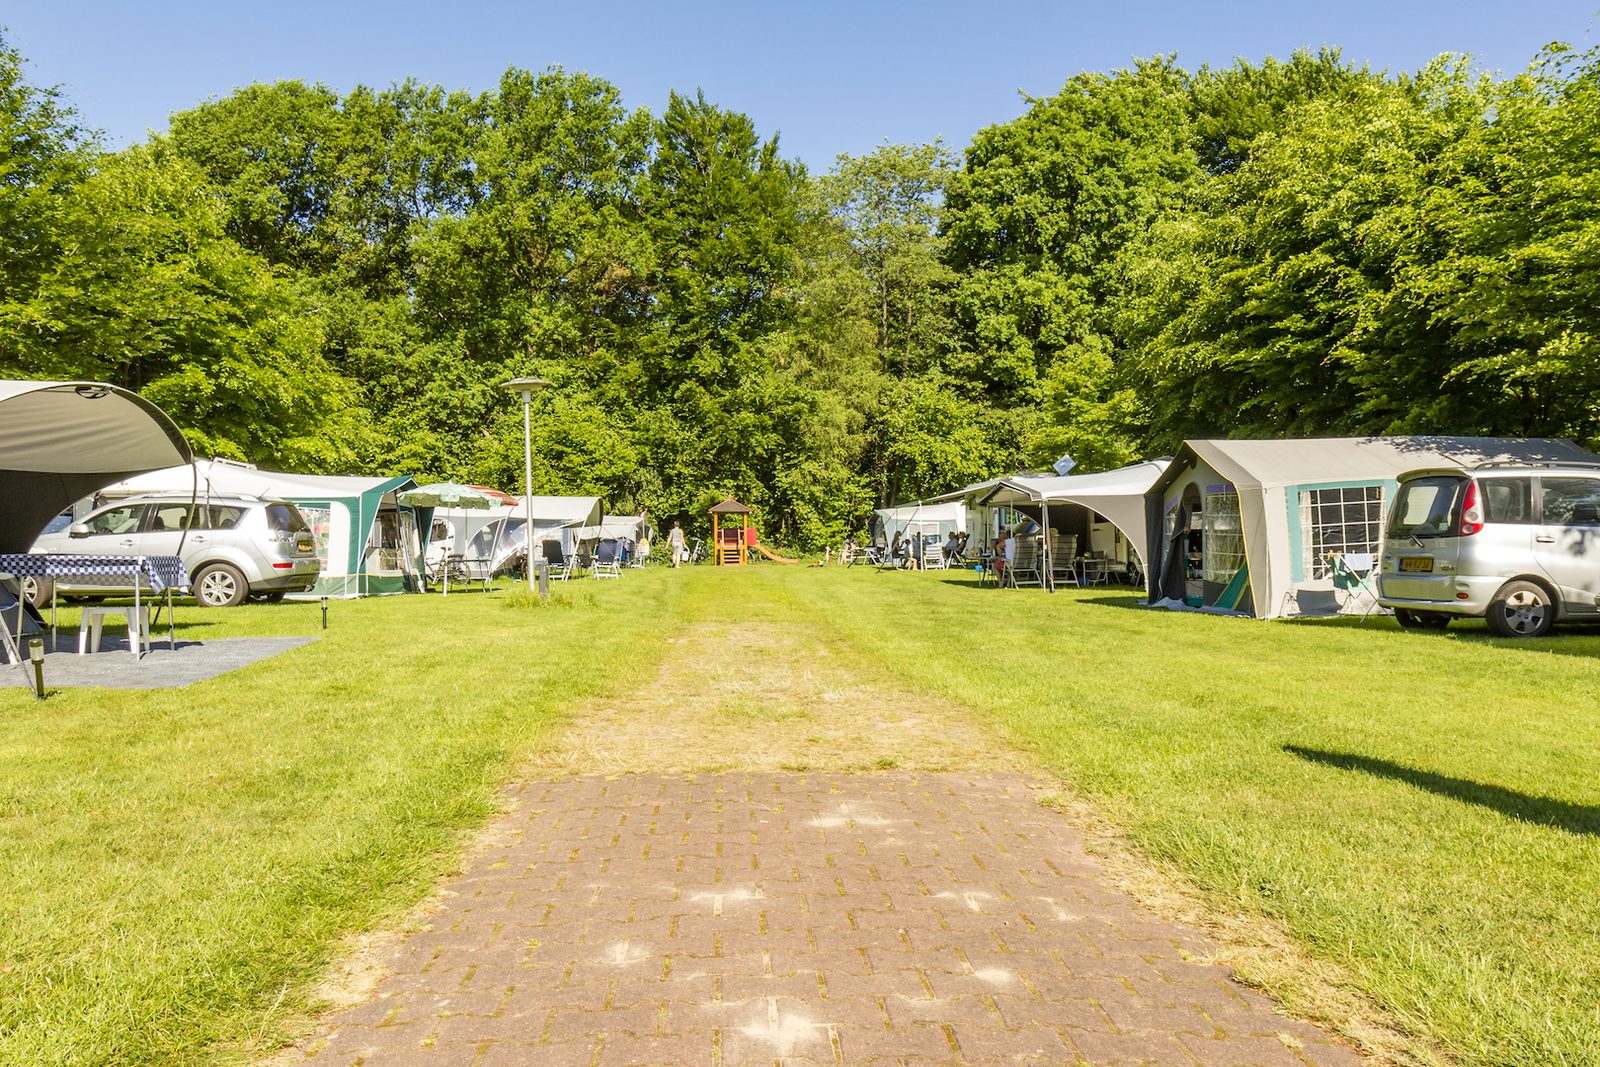 Camping Twente